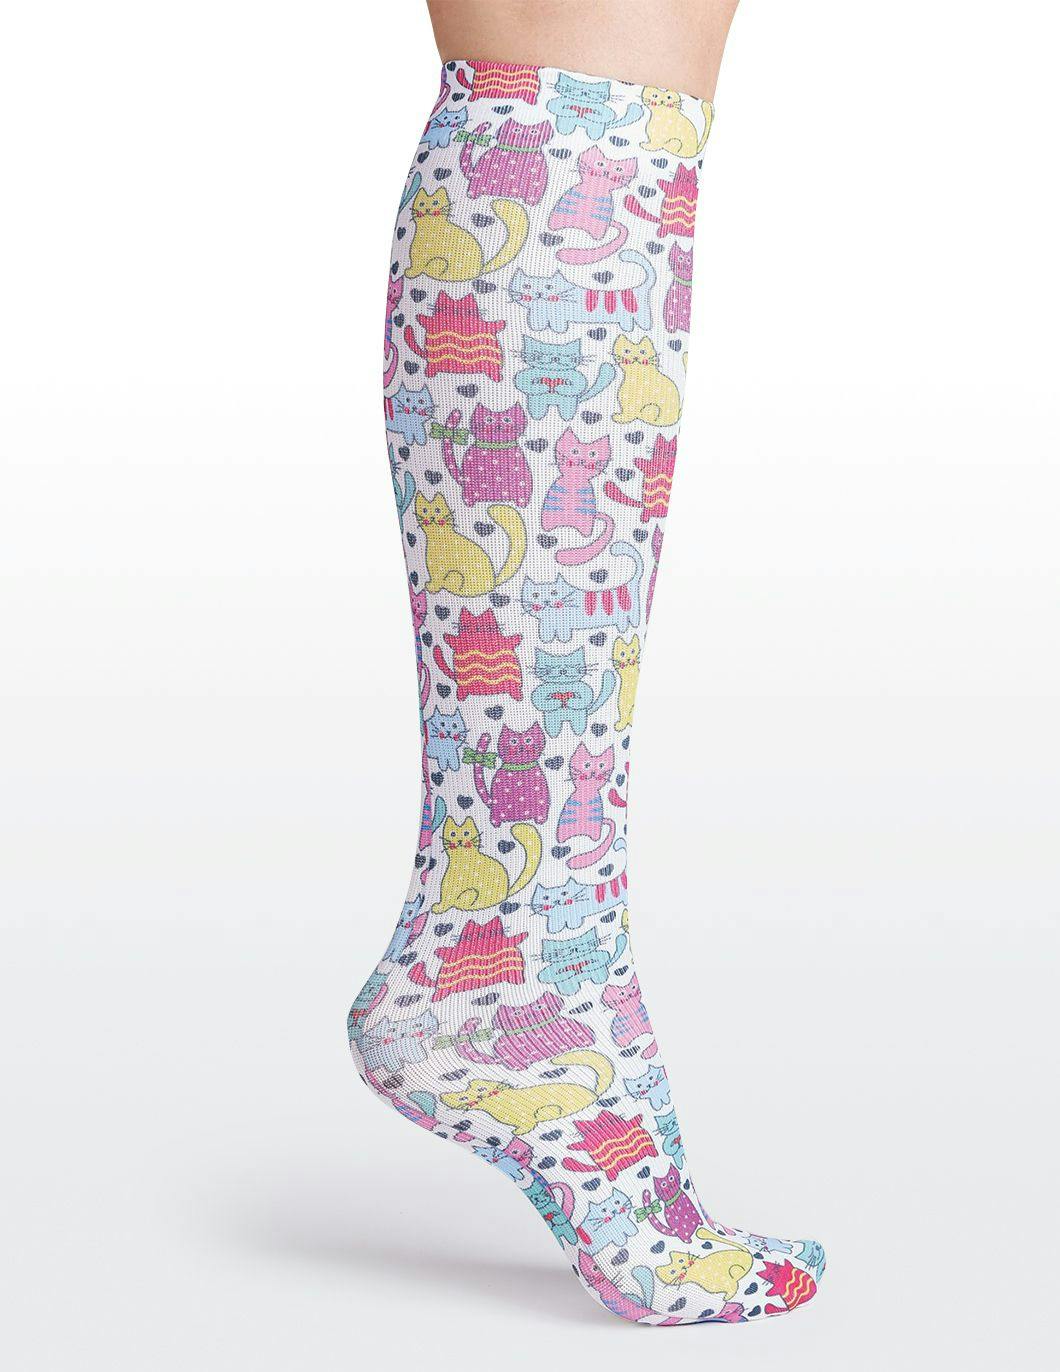 cutieful-compression-socks-10-18-mmhg-felines-print